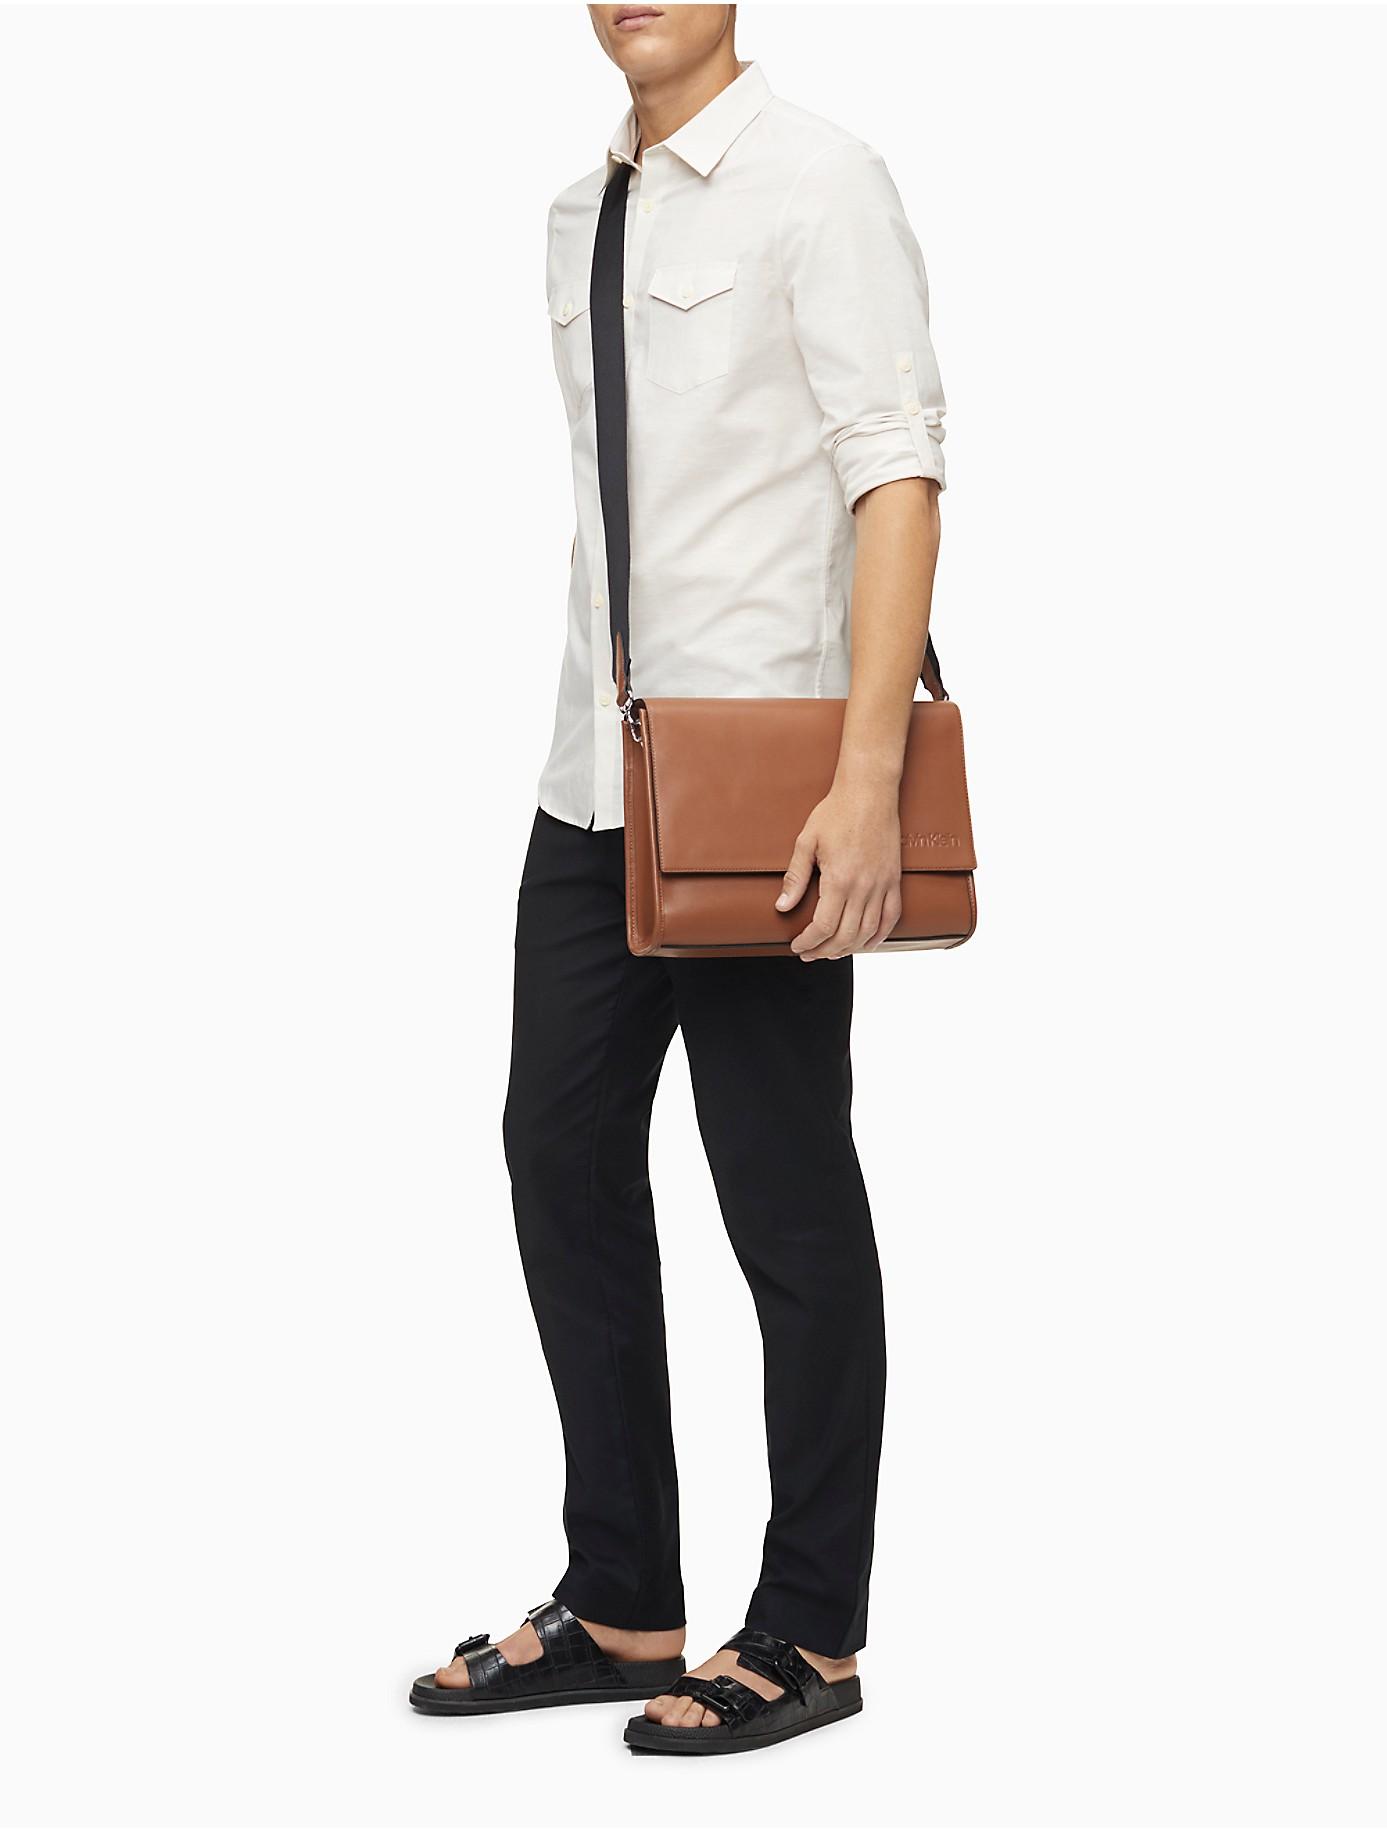 Calvin Klein Refined Leather Messenger Bag in Cognac (Brown) for Men - Lyst